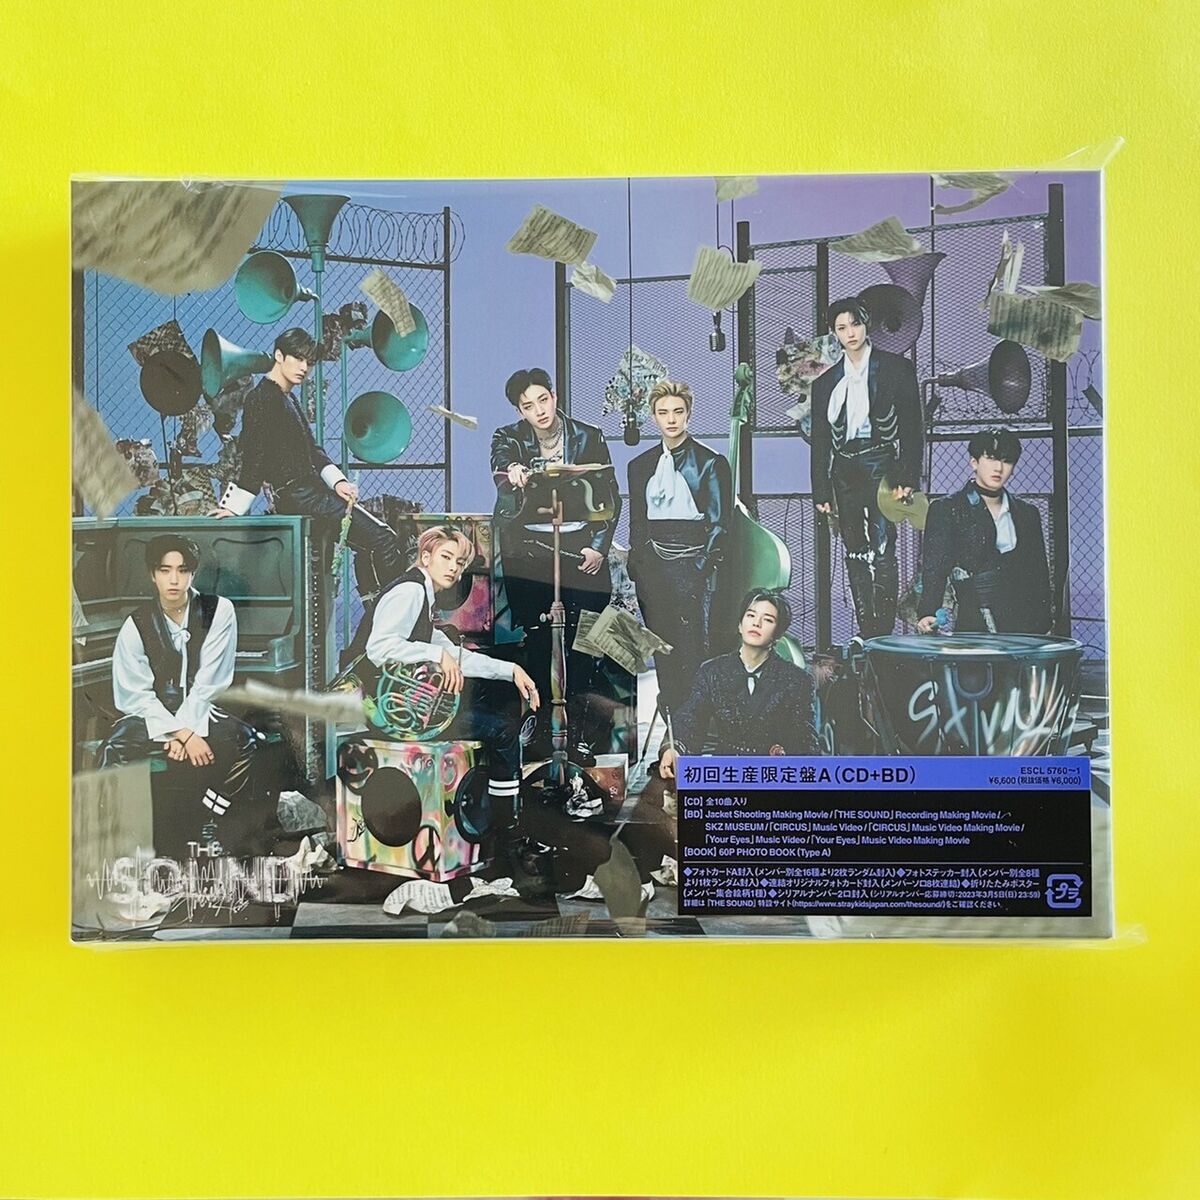 Stray Kids THE SOUND Japan 1st Album Official CD SKZ | eBay